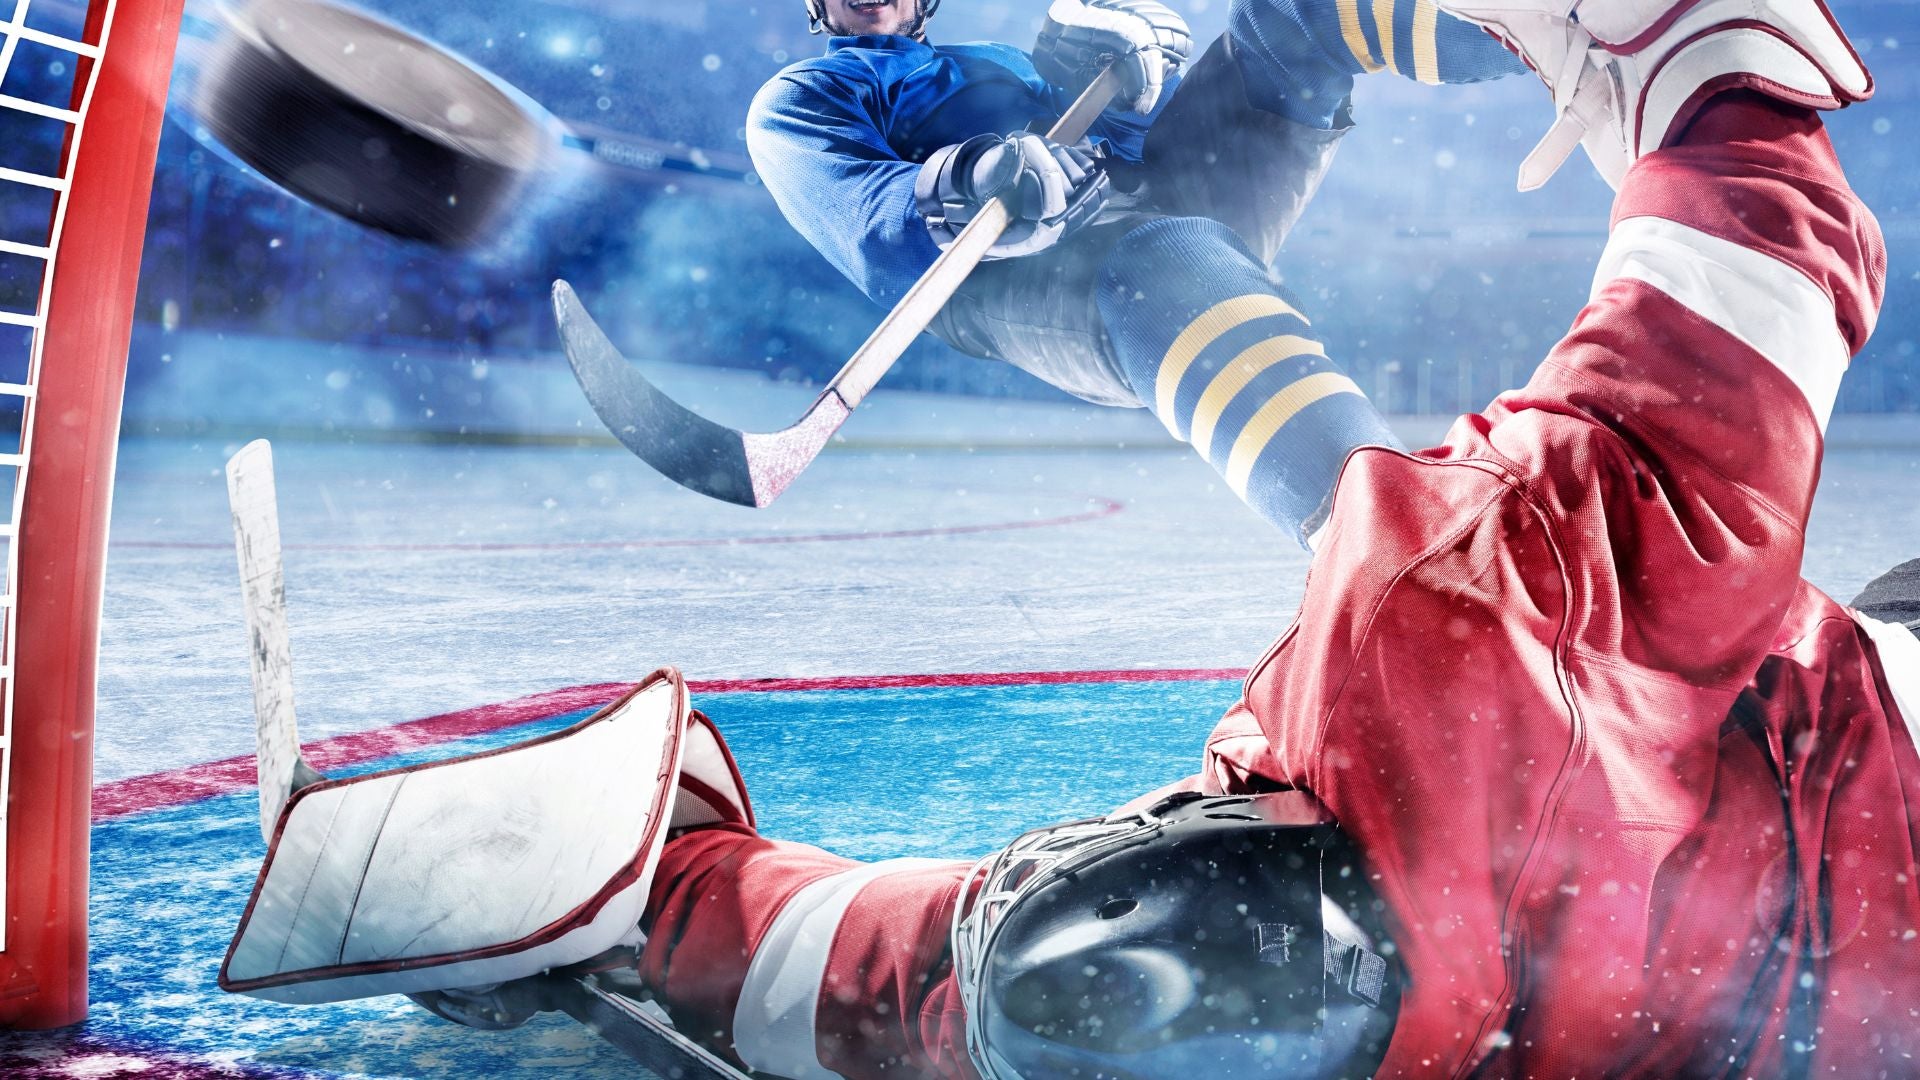 Frozen Fury: A Hockey Anthem